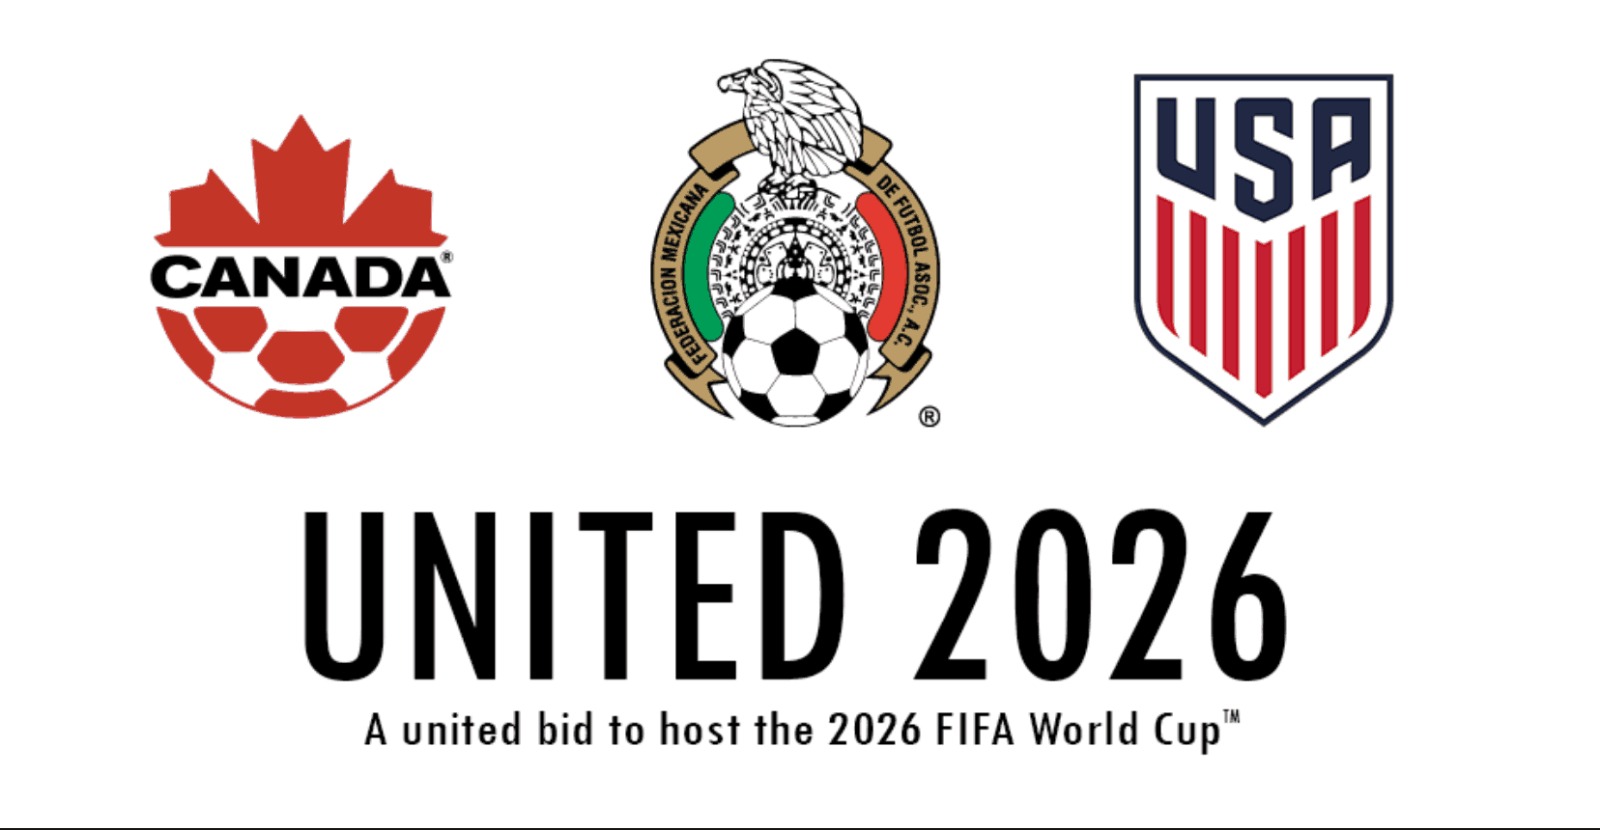 Tres países organizan mundial de futbol 2026